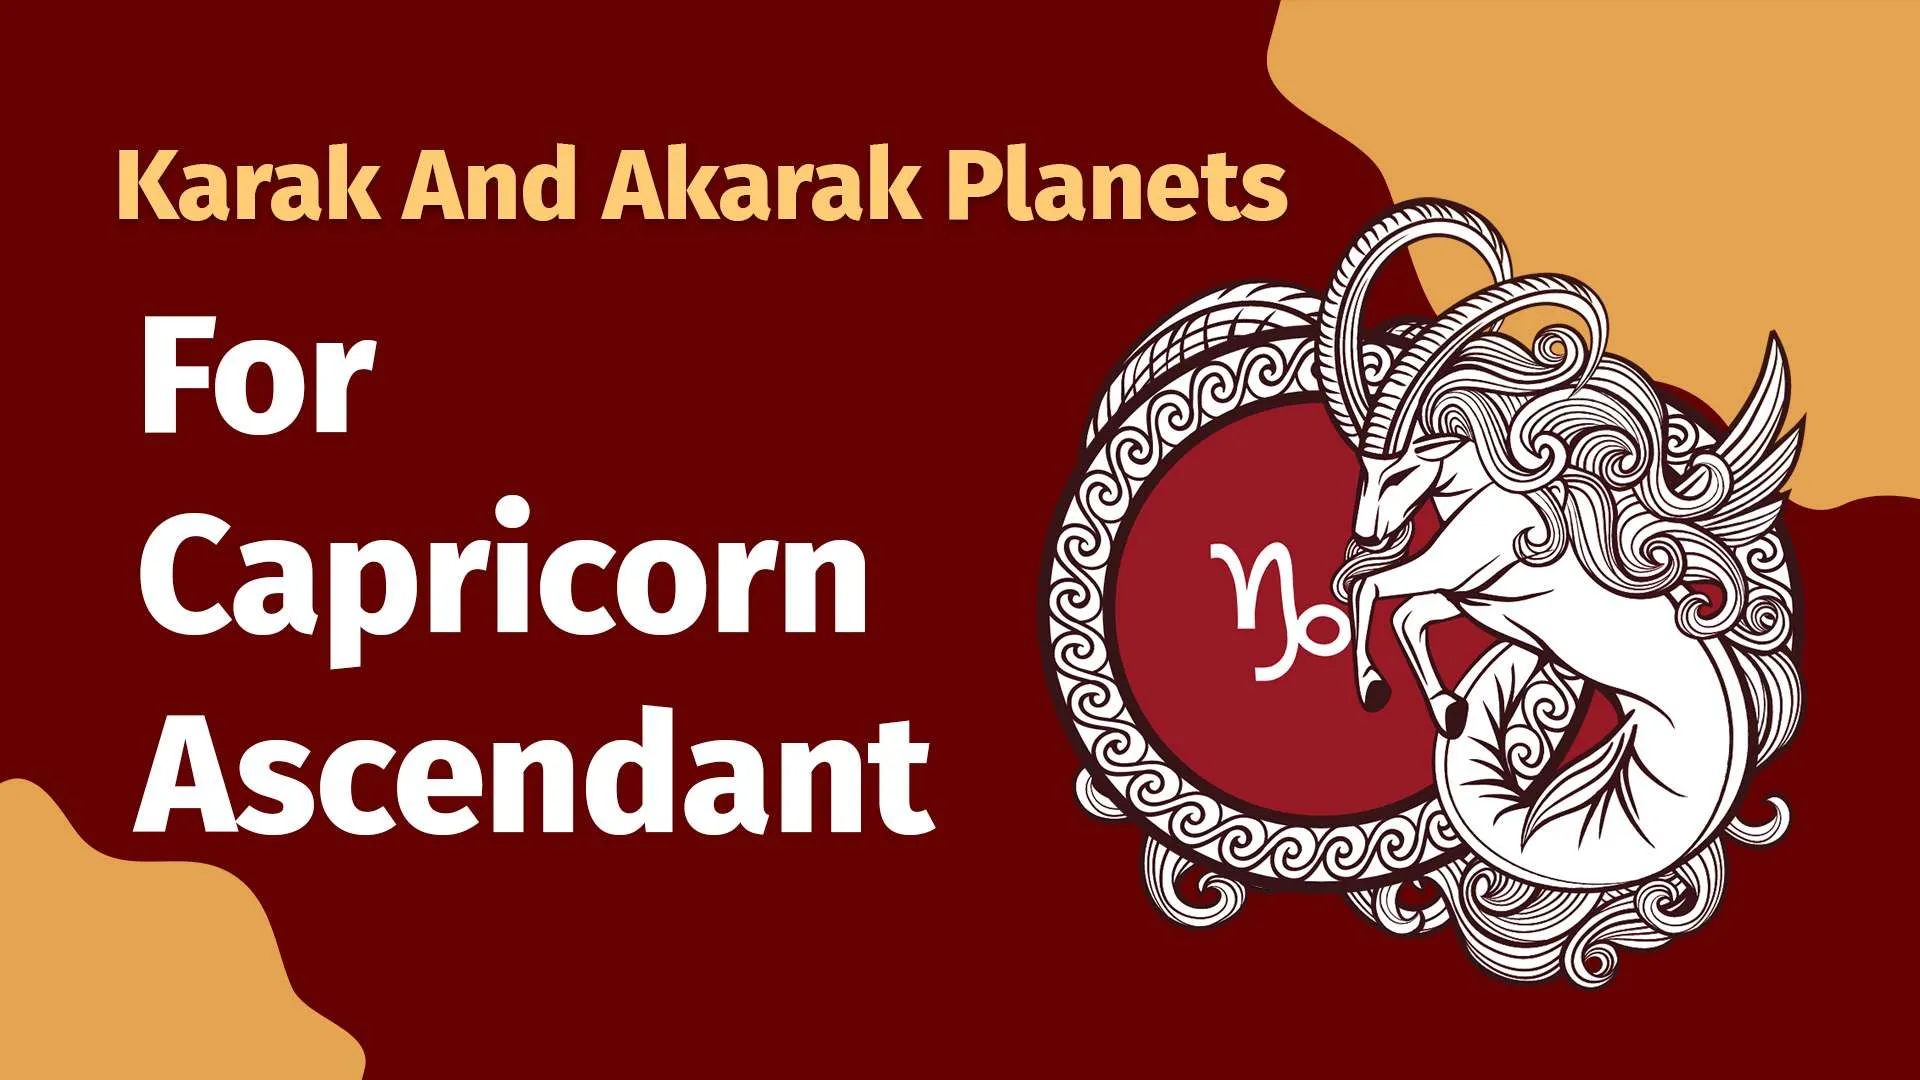 Karak and Karak planets for Capricorn Ascendants